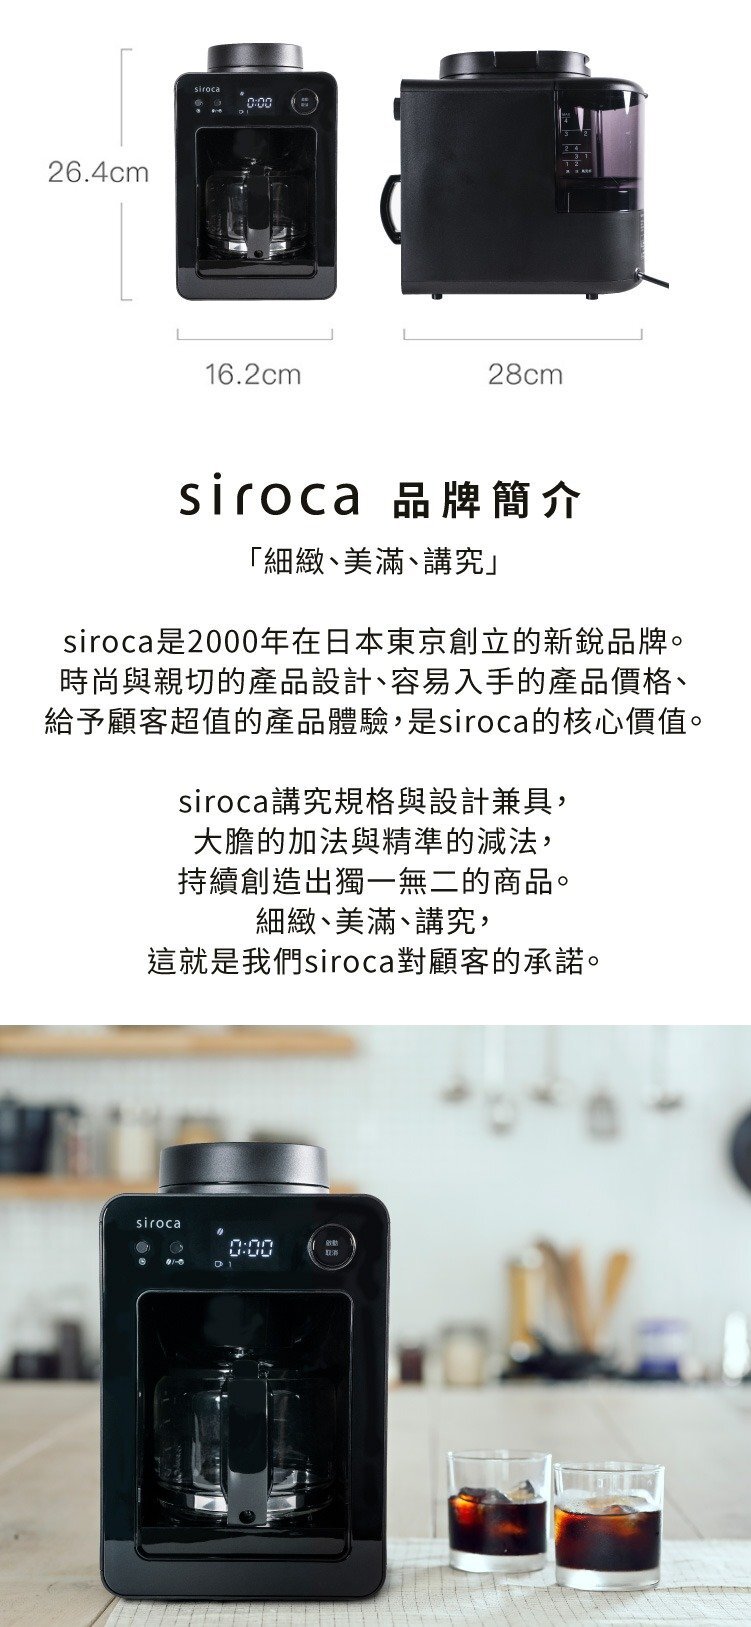 Siroca - SC-A3513 Automatic Coffee Grinding Machine